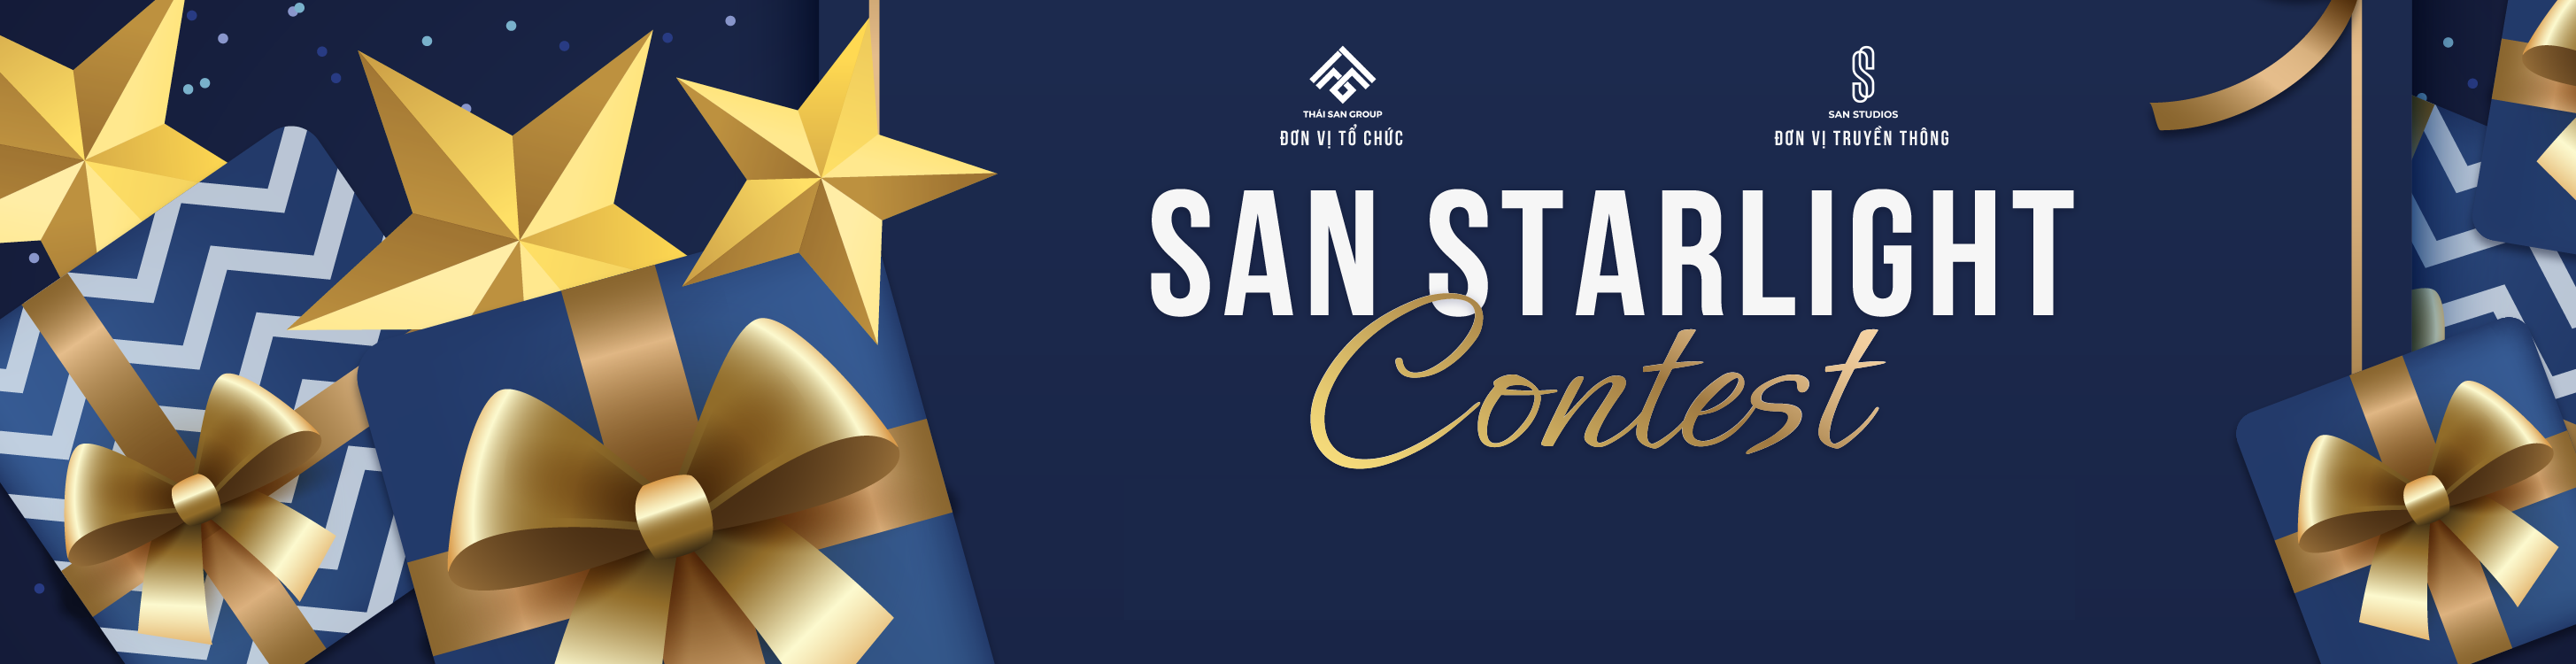 san starlight contest